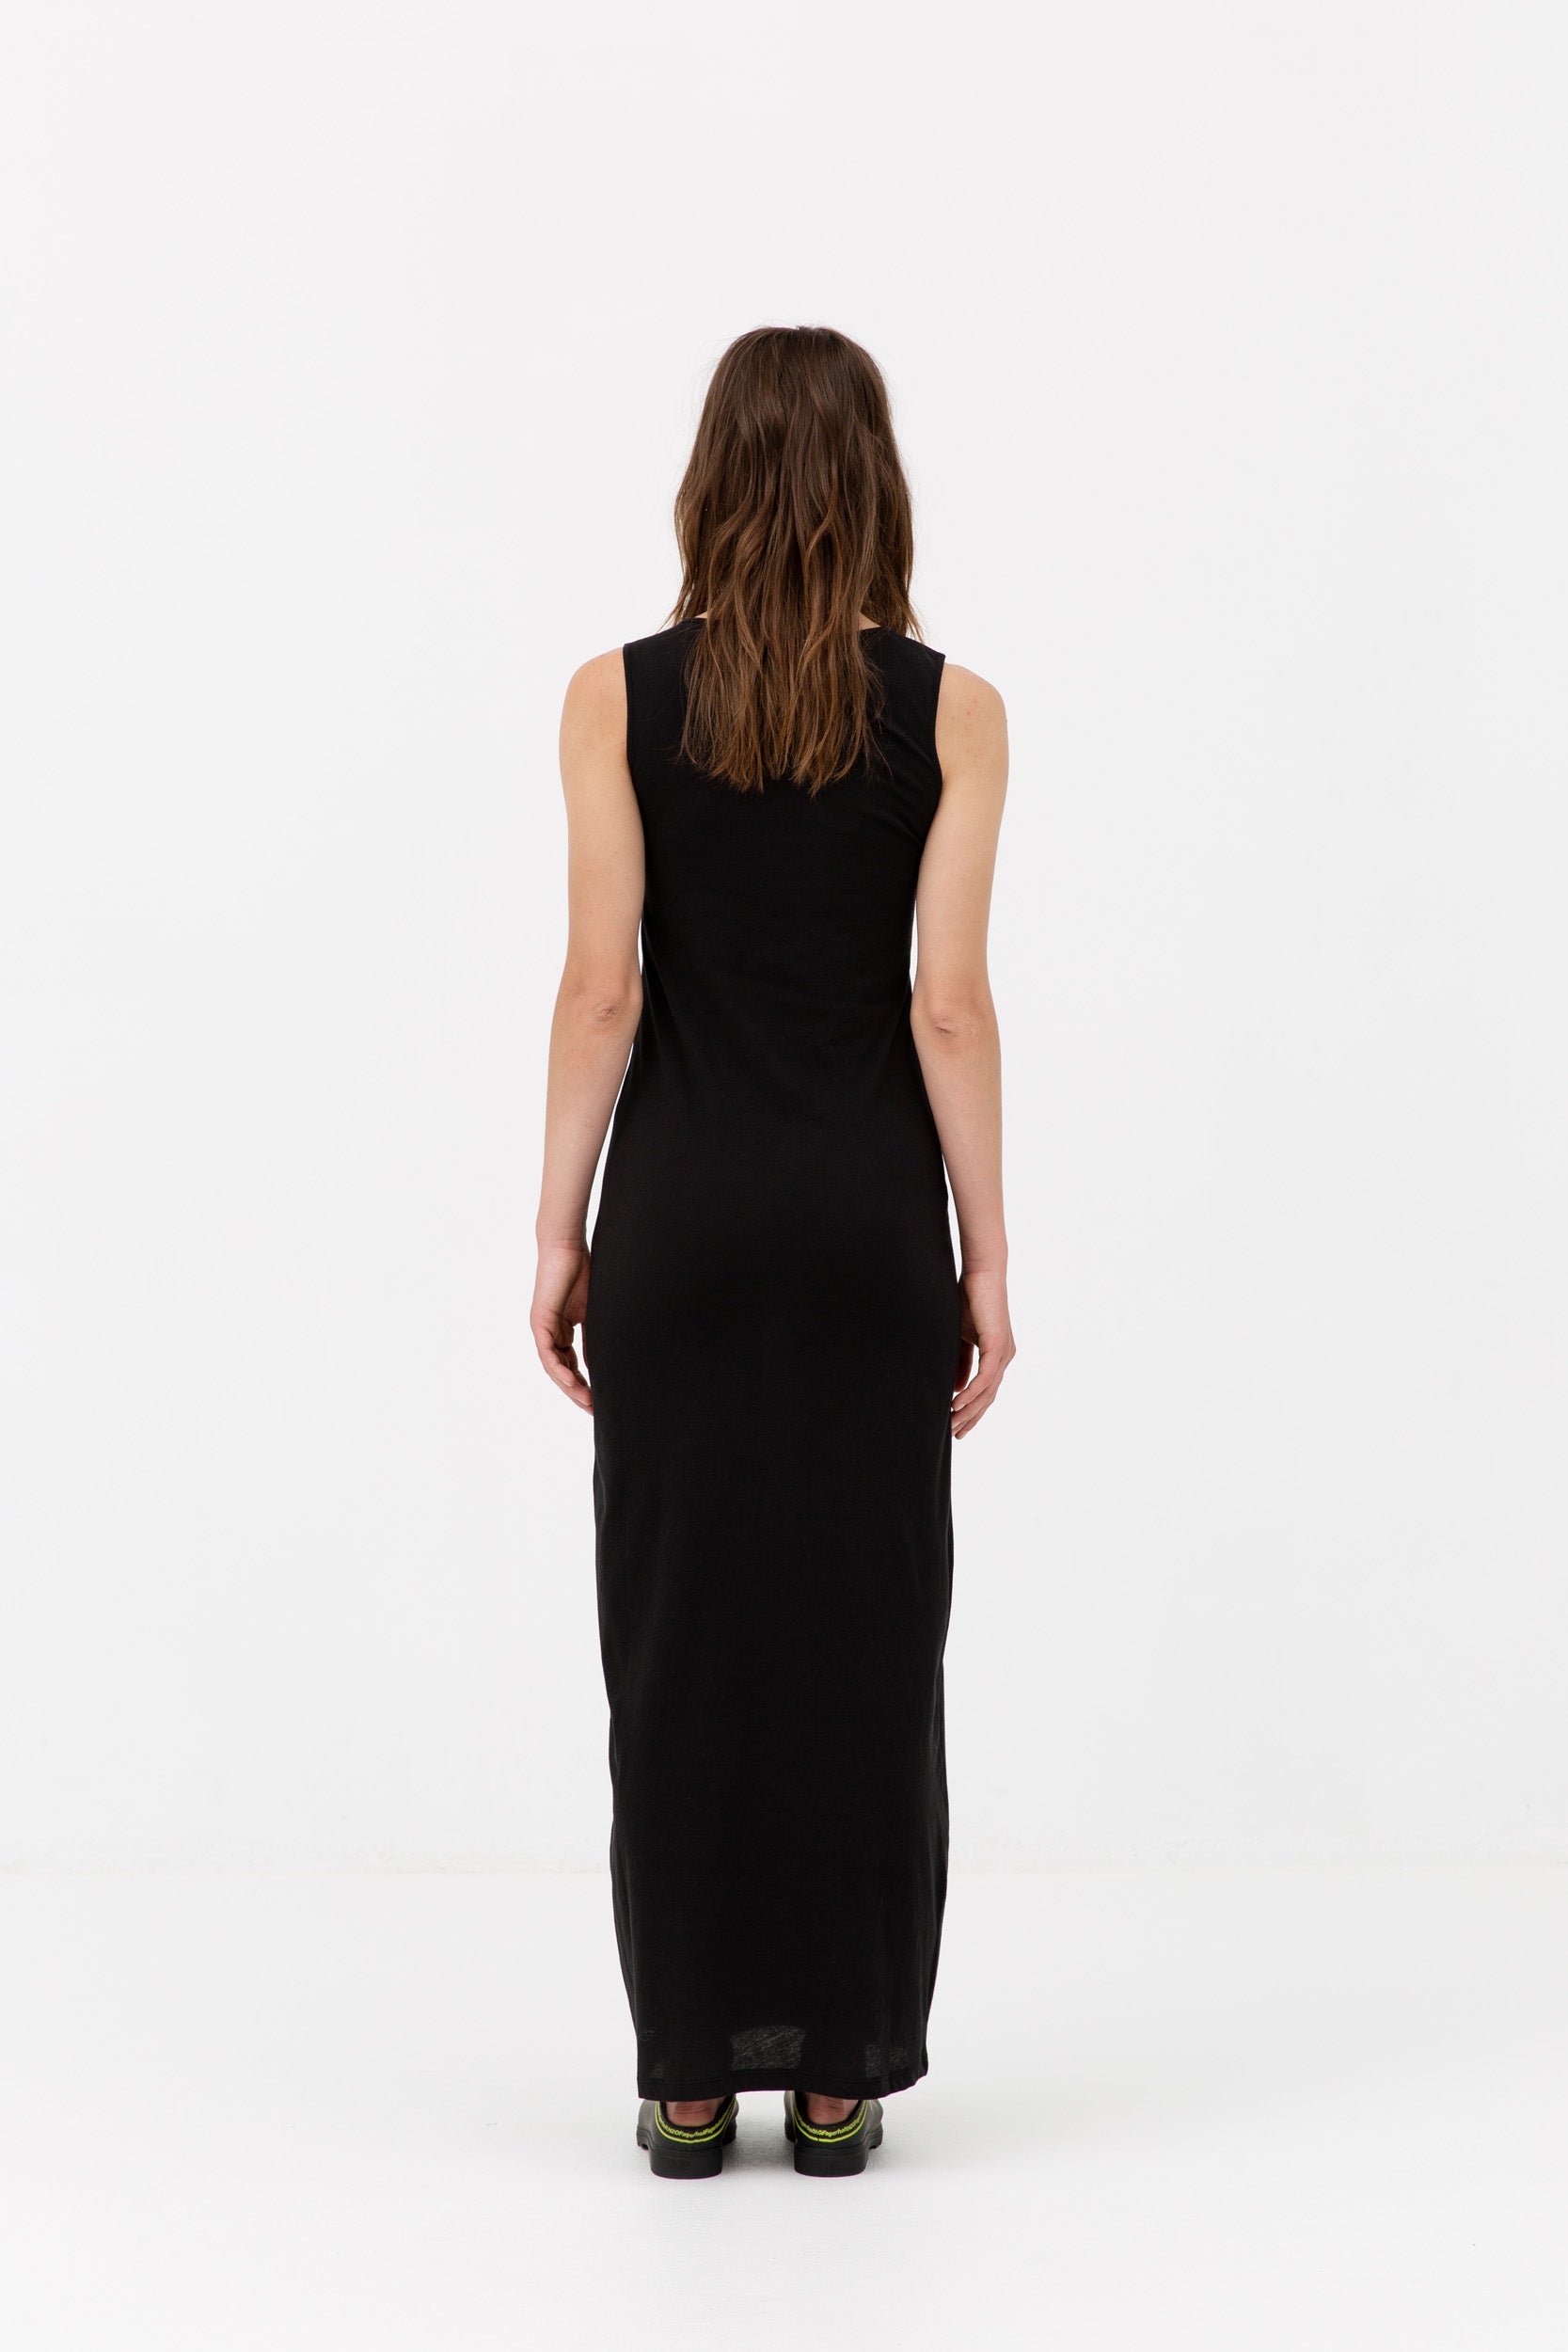 H2OFagerholt Sophia Dress Dress 3501 Deep Black